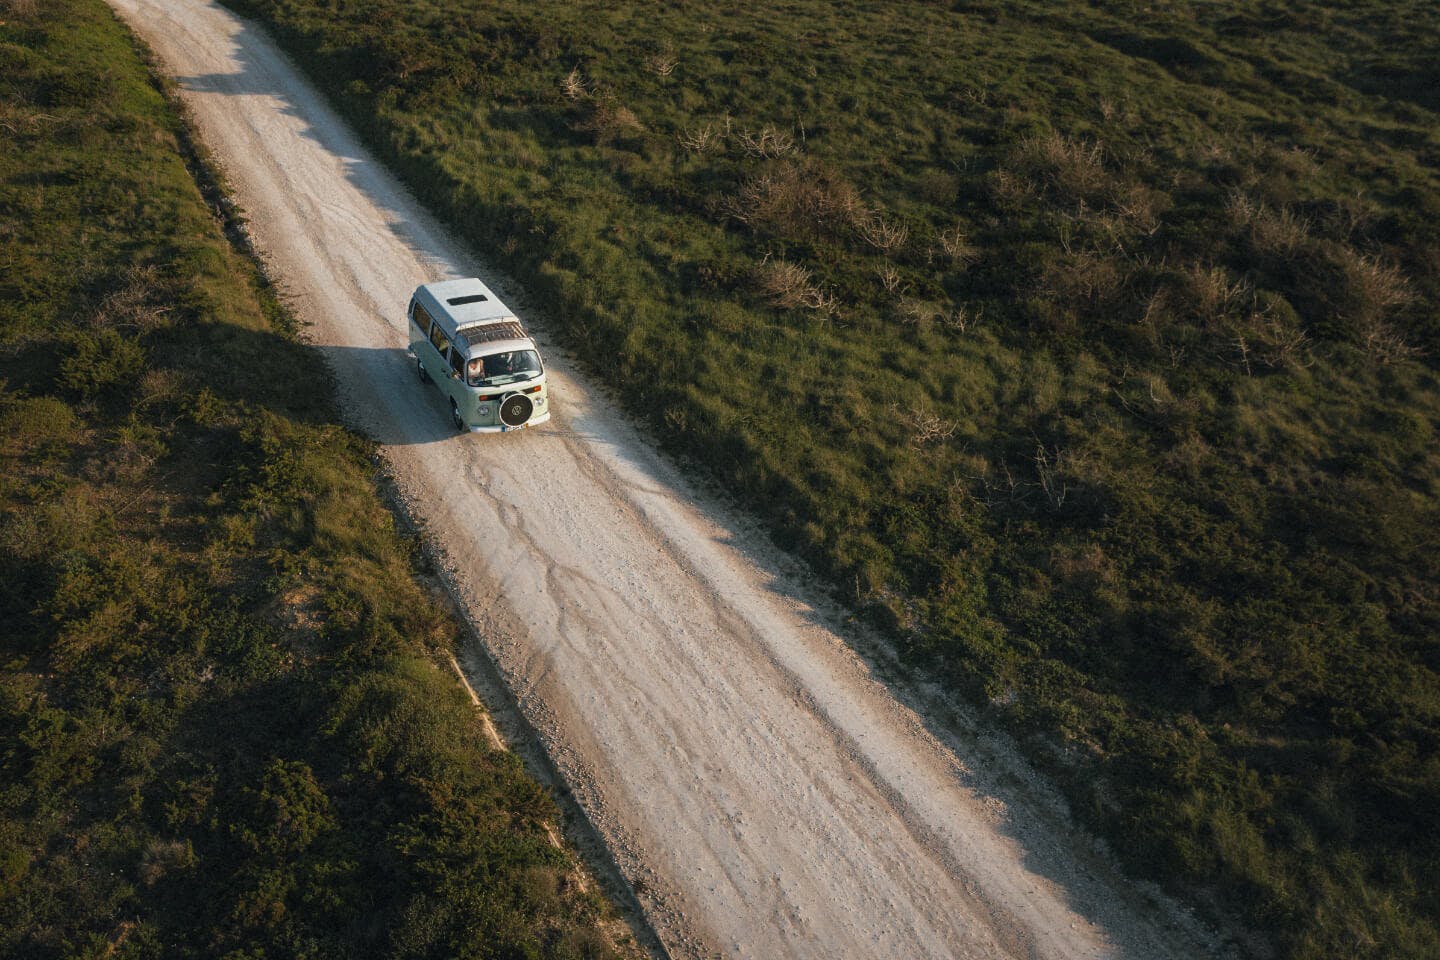 Campervan on dirt road in Alentejo, Portugal.